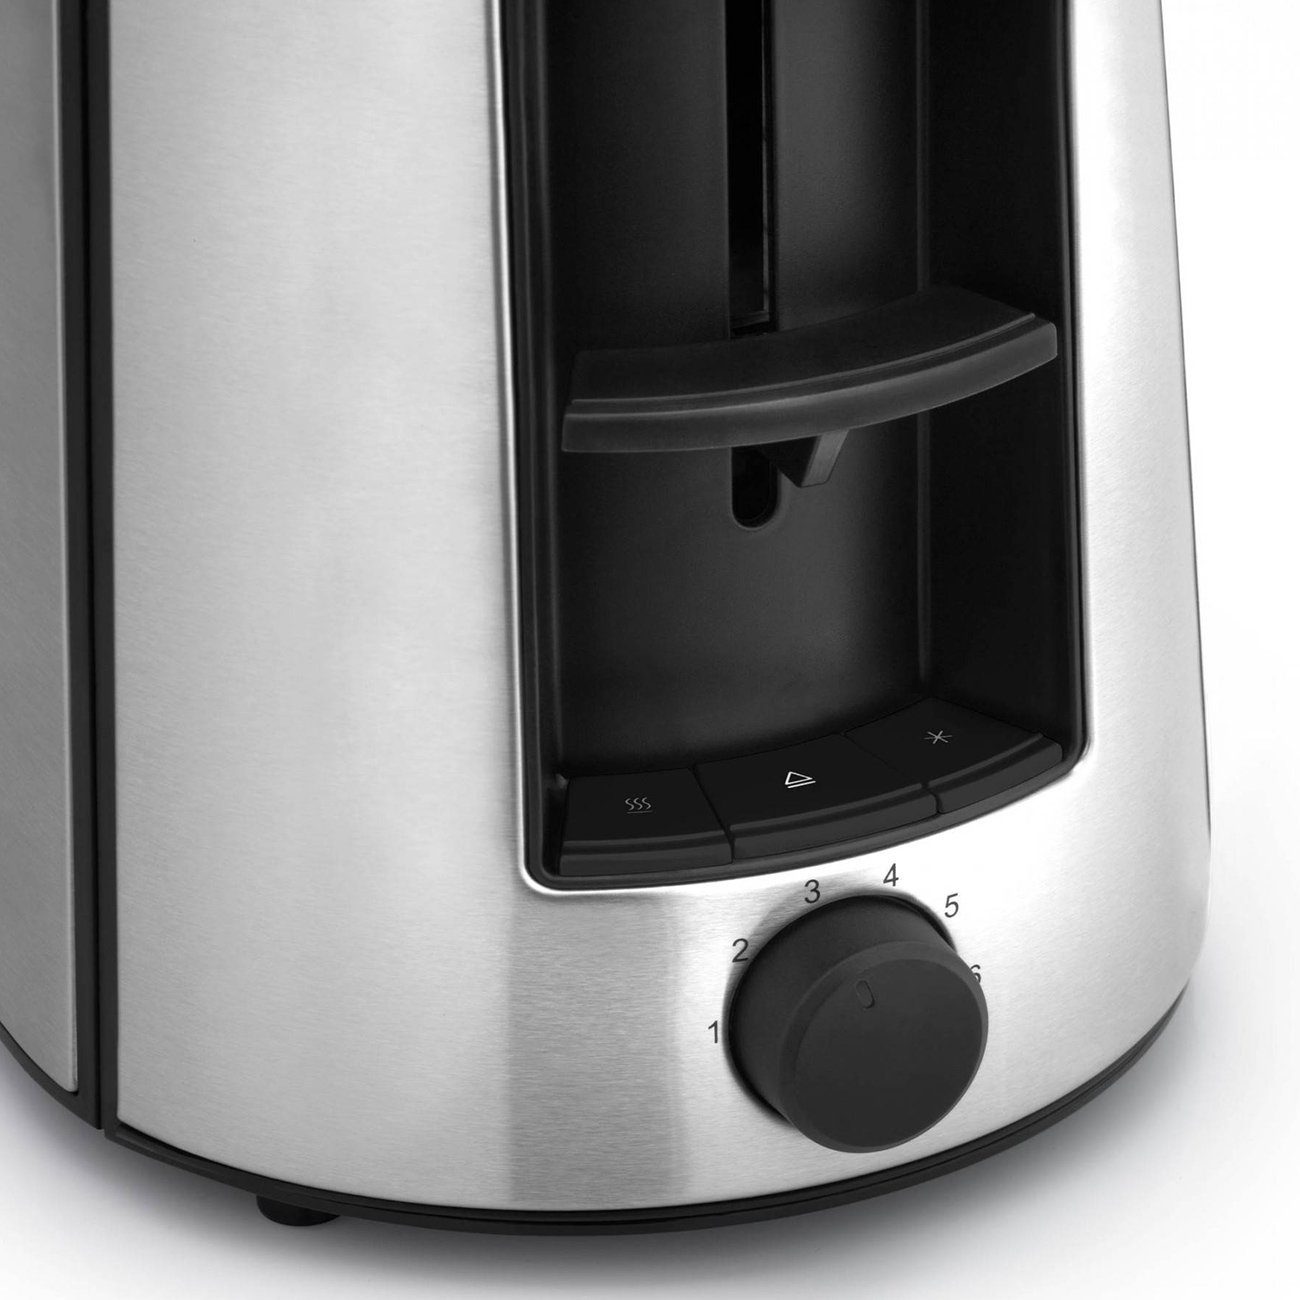 730 WMF Toaster Bueno W Pro,